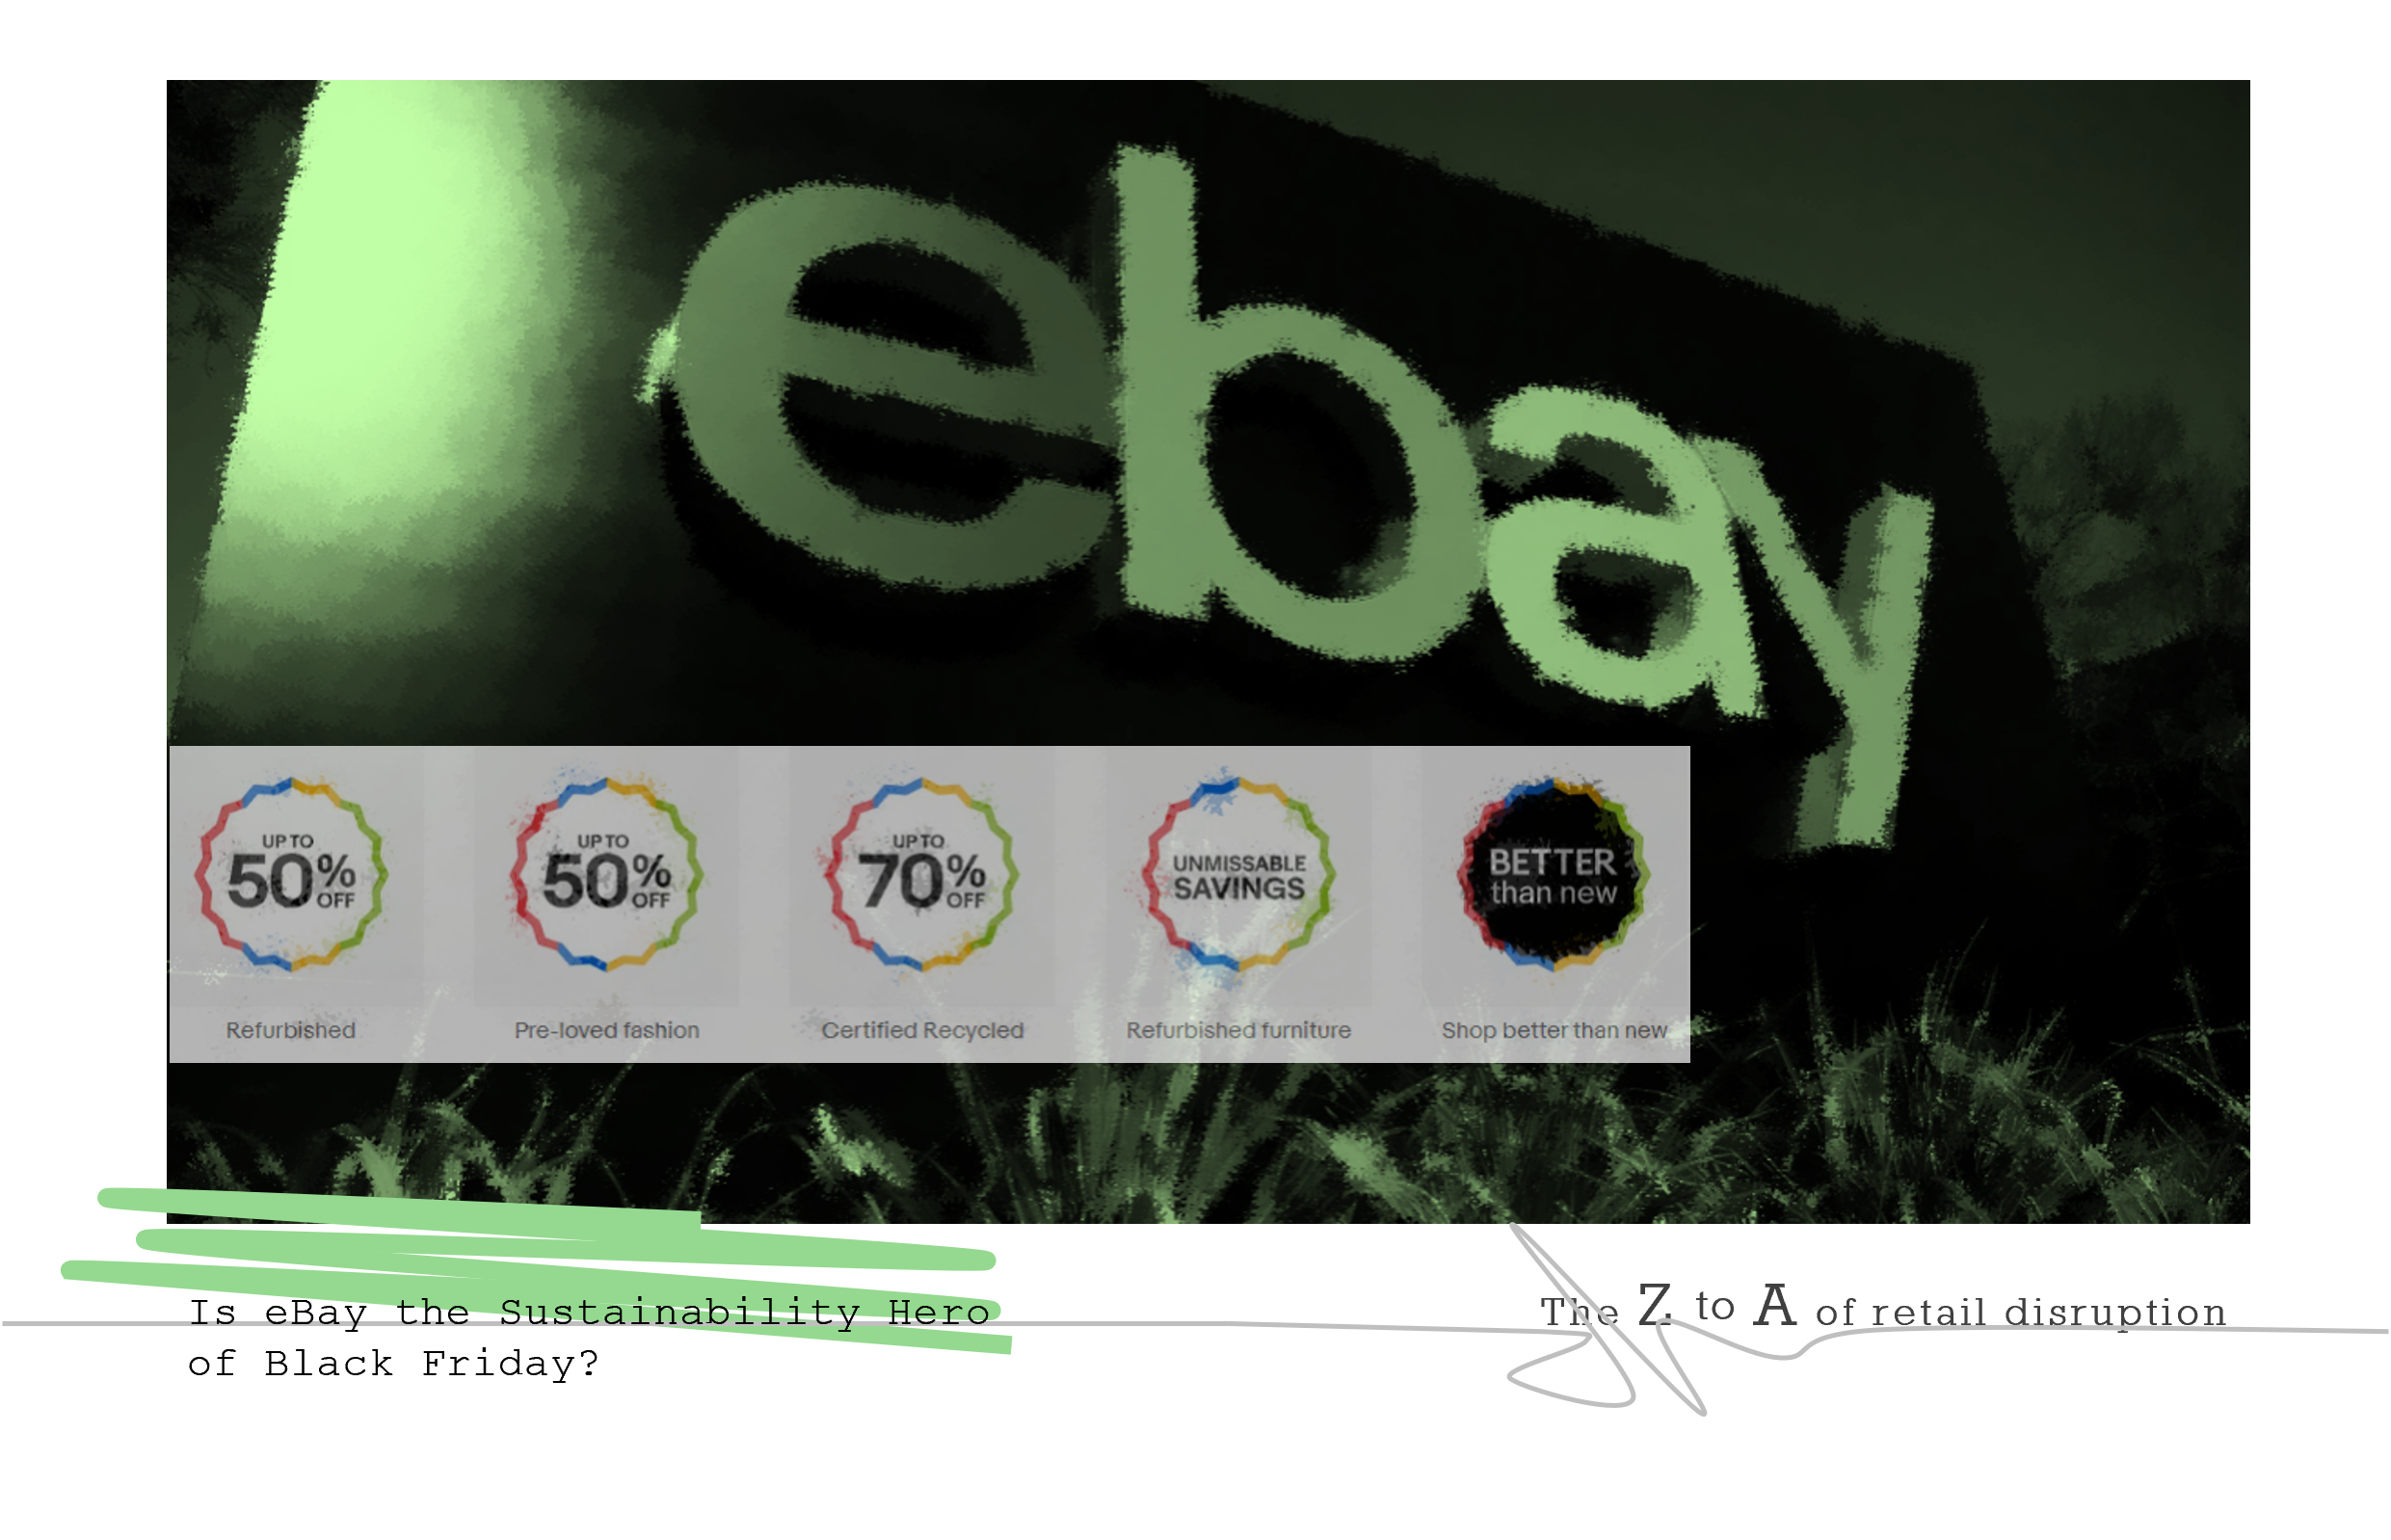 Is eBay the Sustainability Hero of Black Friday?